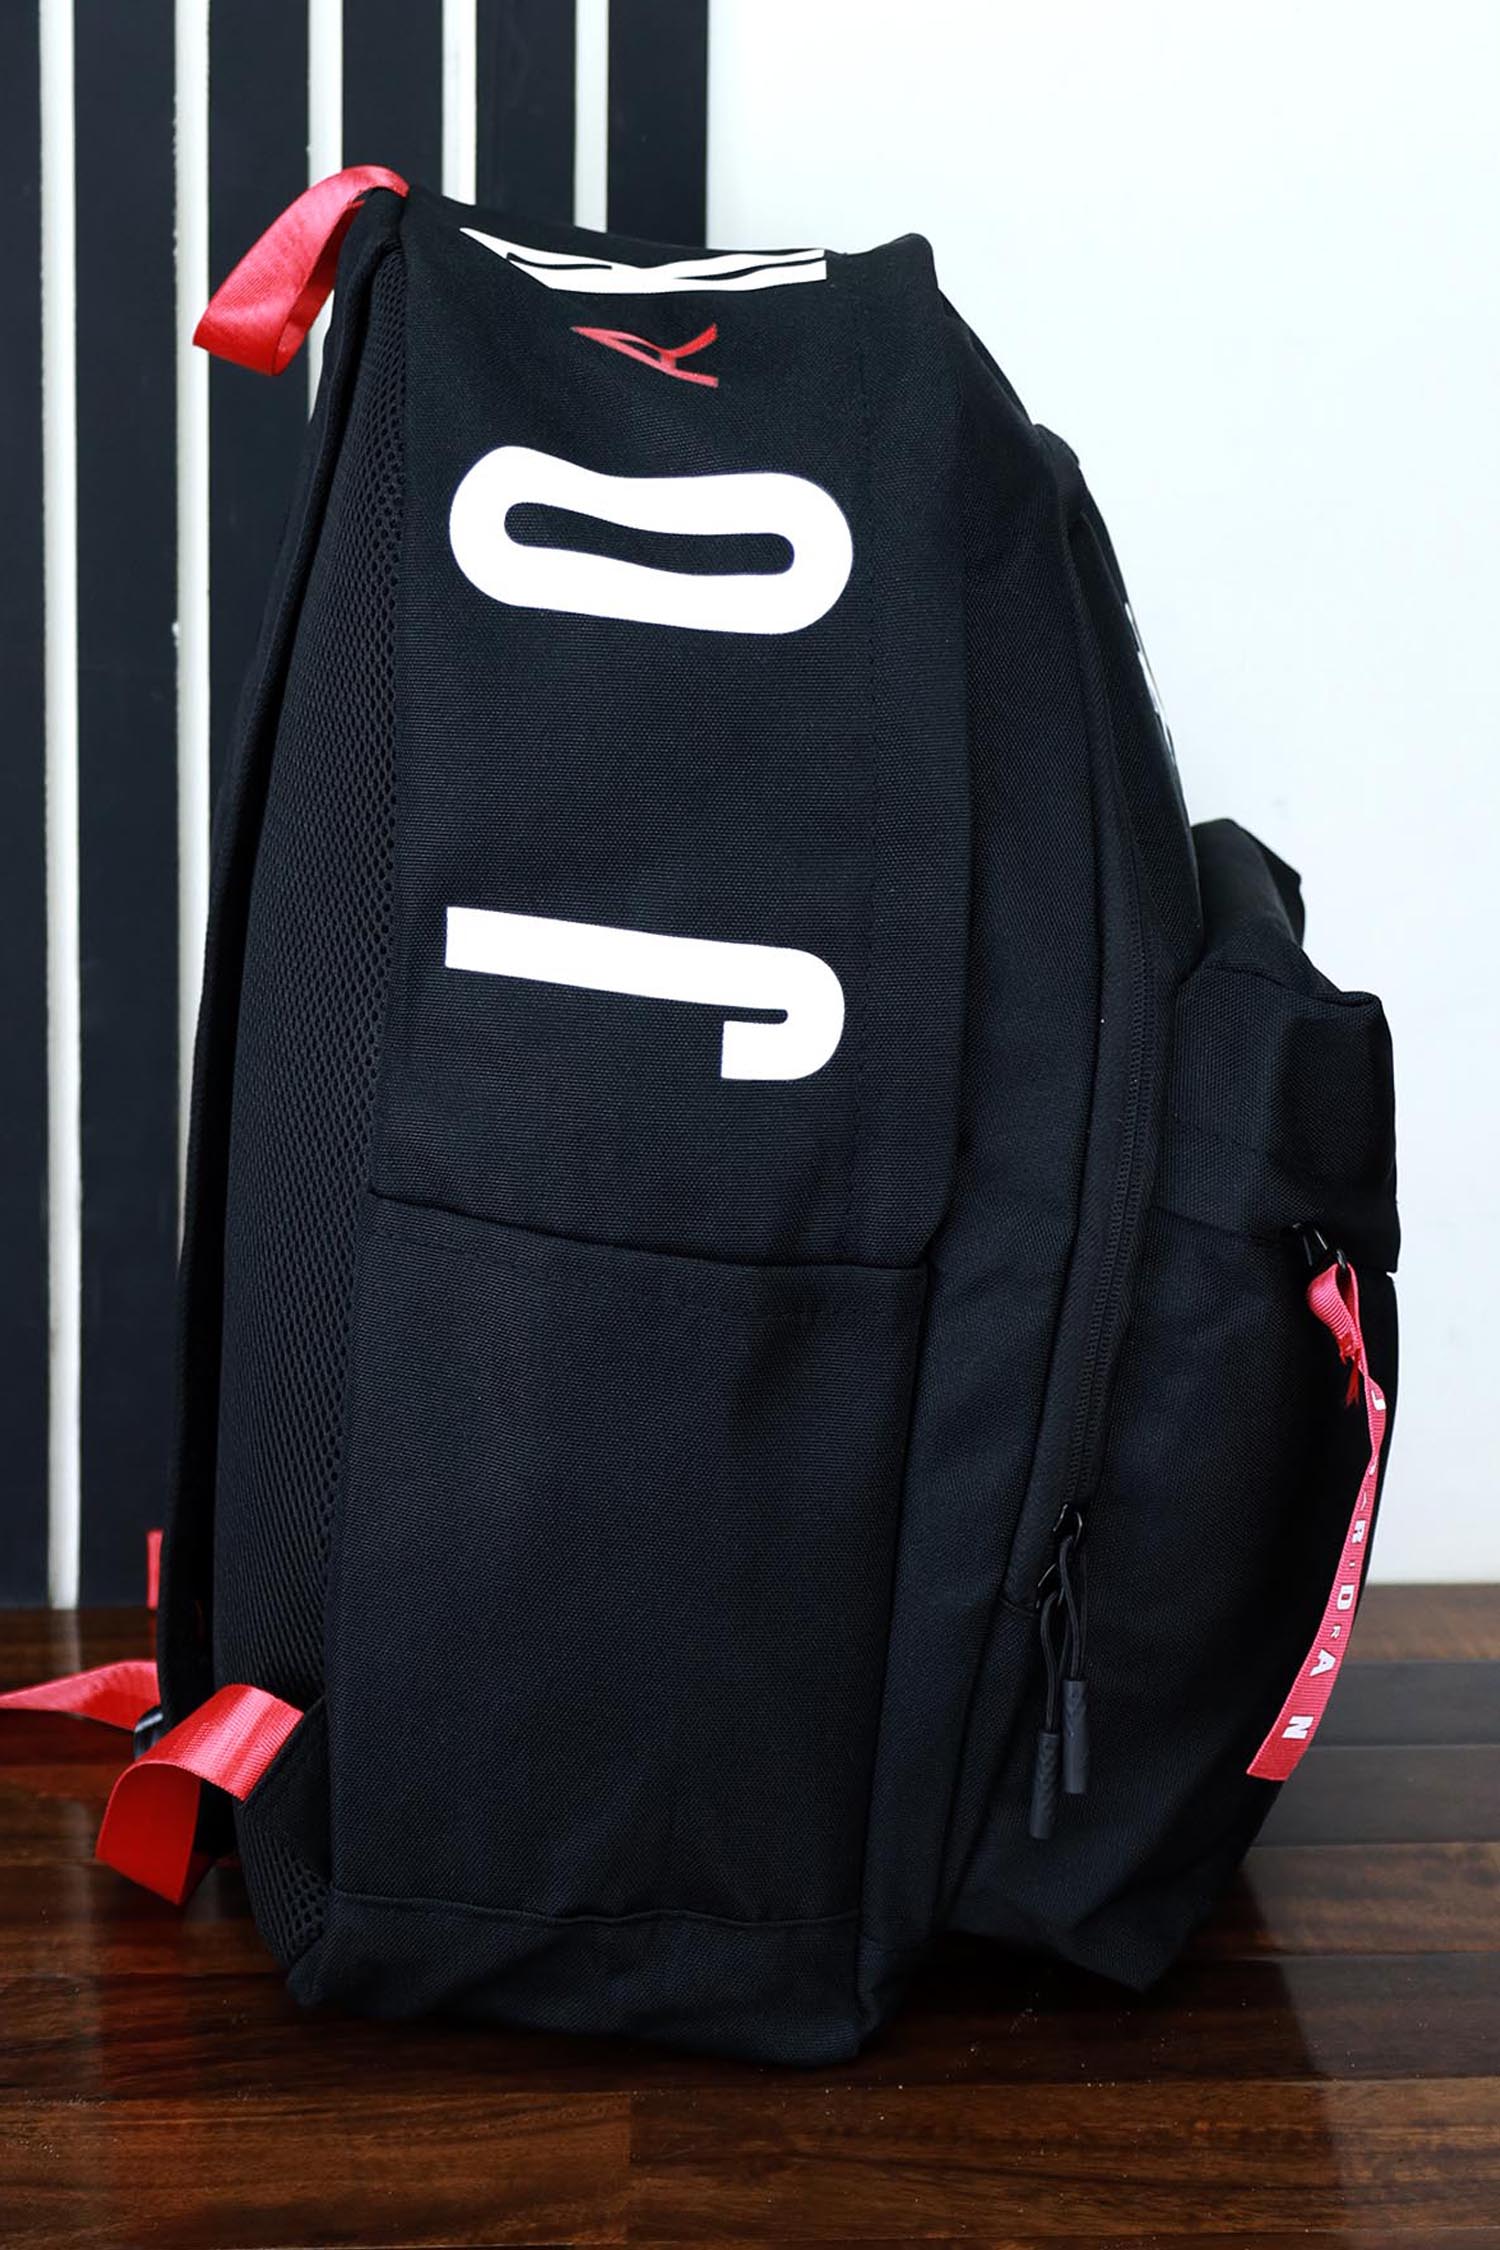 Jrdn Backpack In Black&White